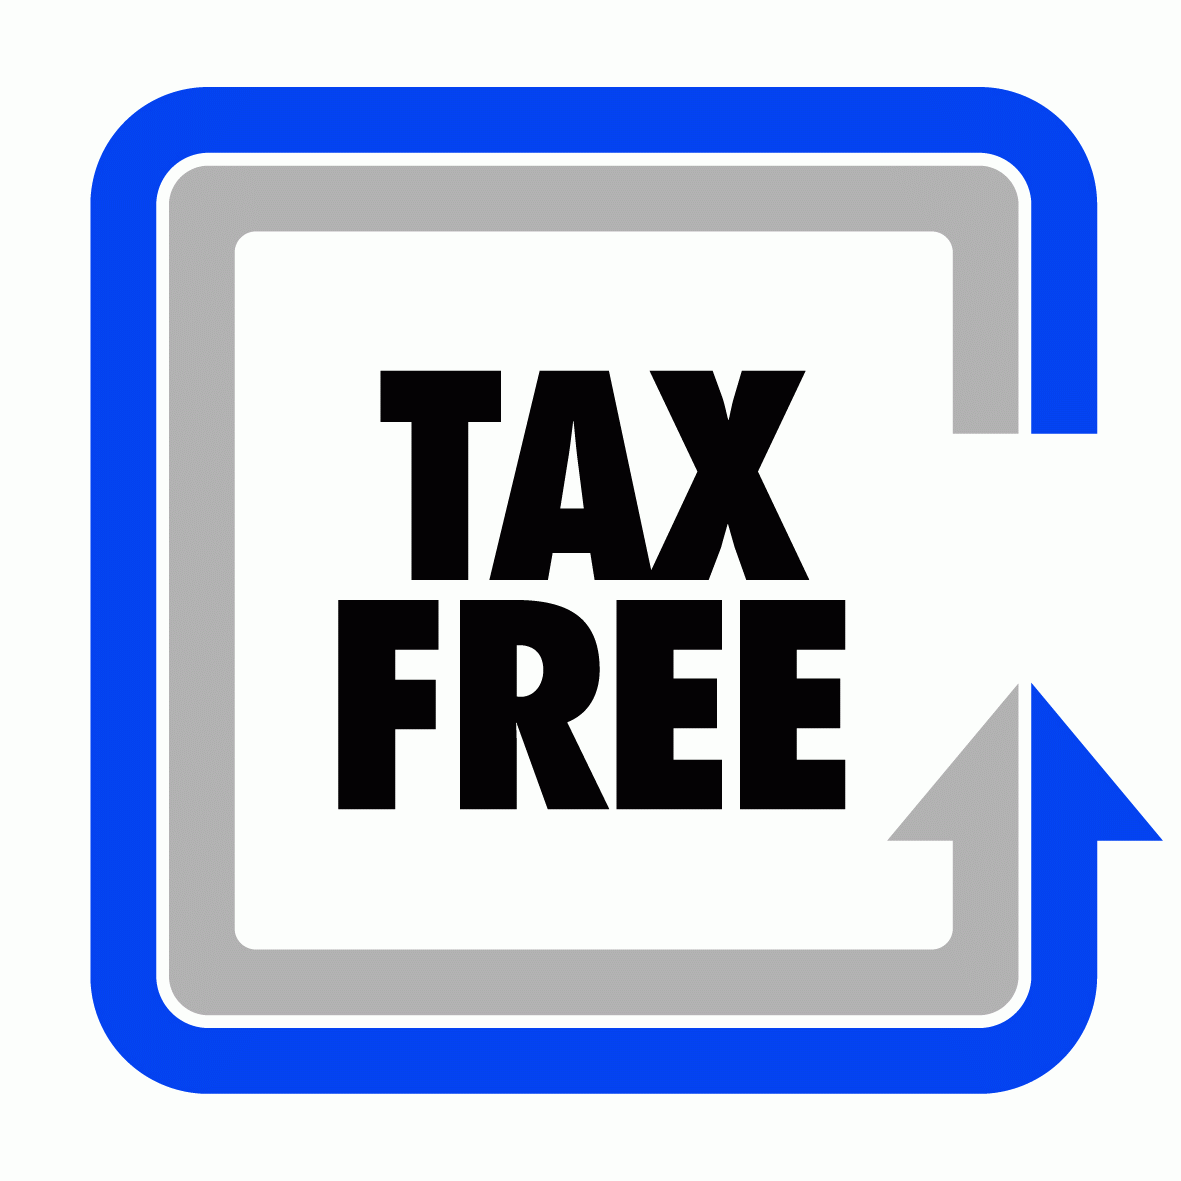 noiq-offer-tax-free-winnings